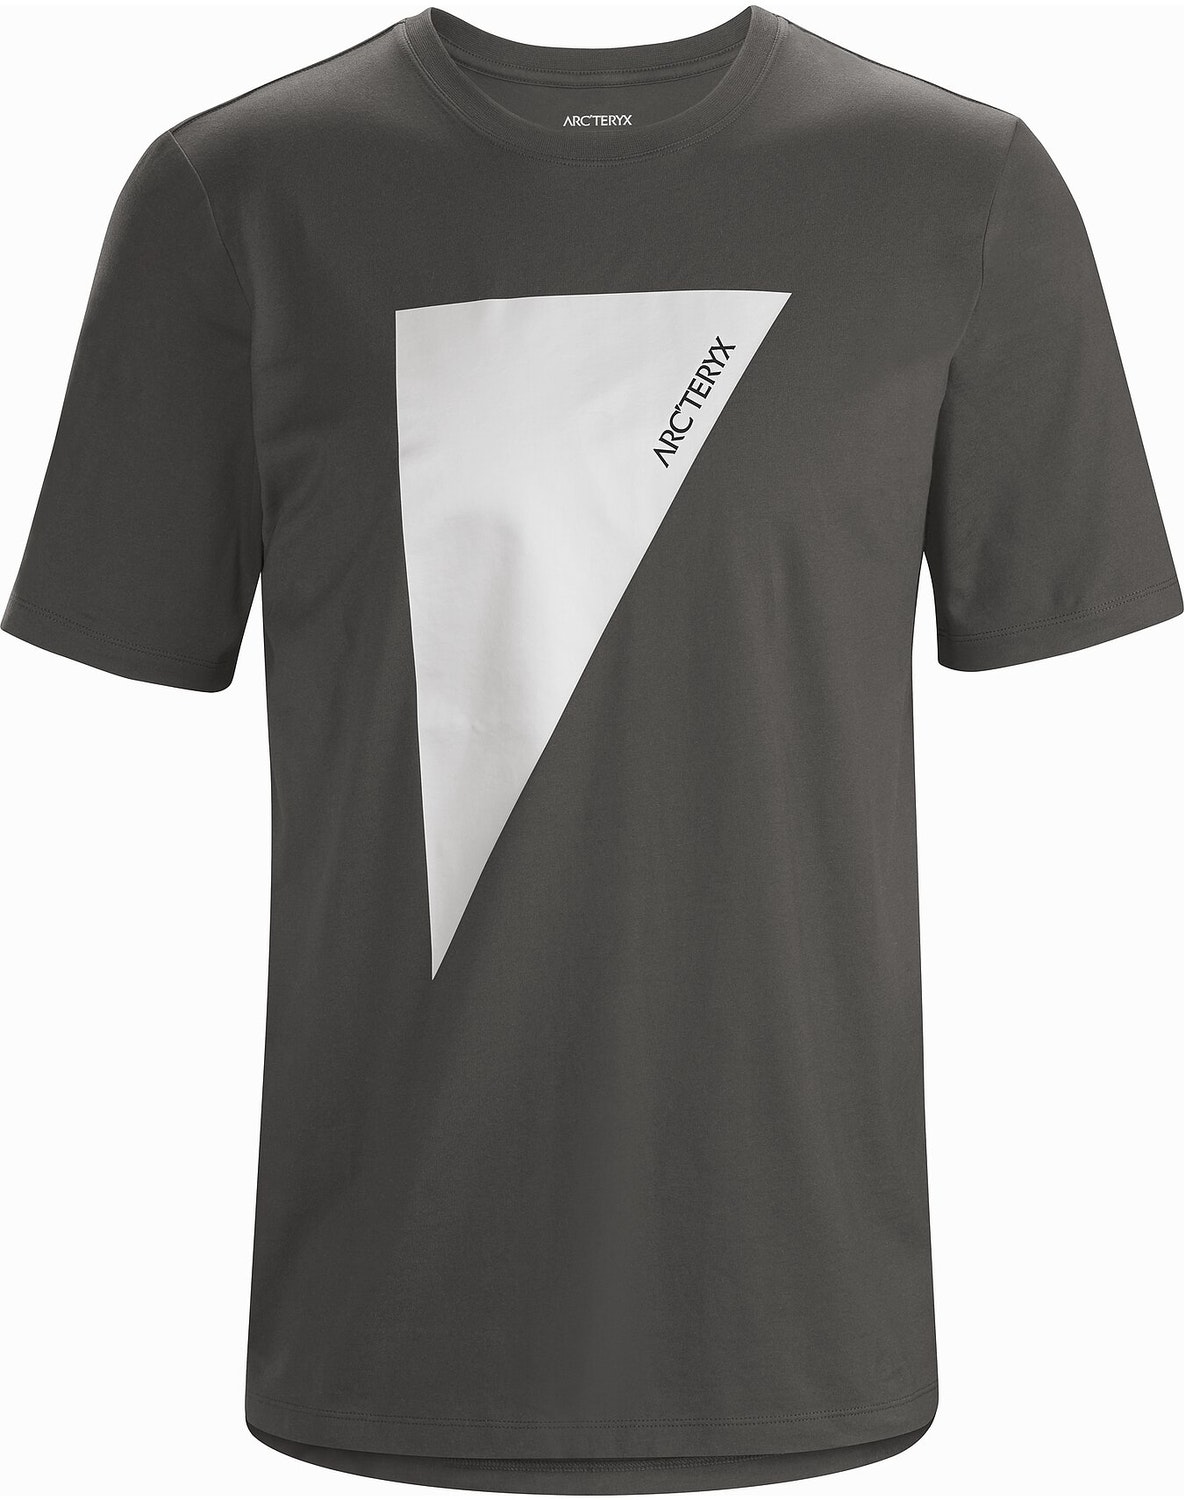 T-shirt Arc'teryx Arc'postrophe Word Uomo Grigie Scuro - IT-5953113